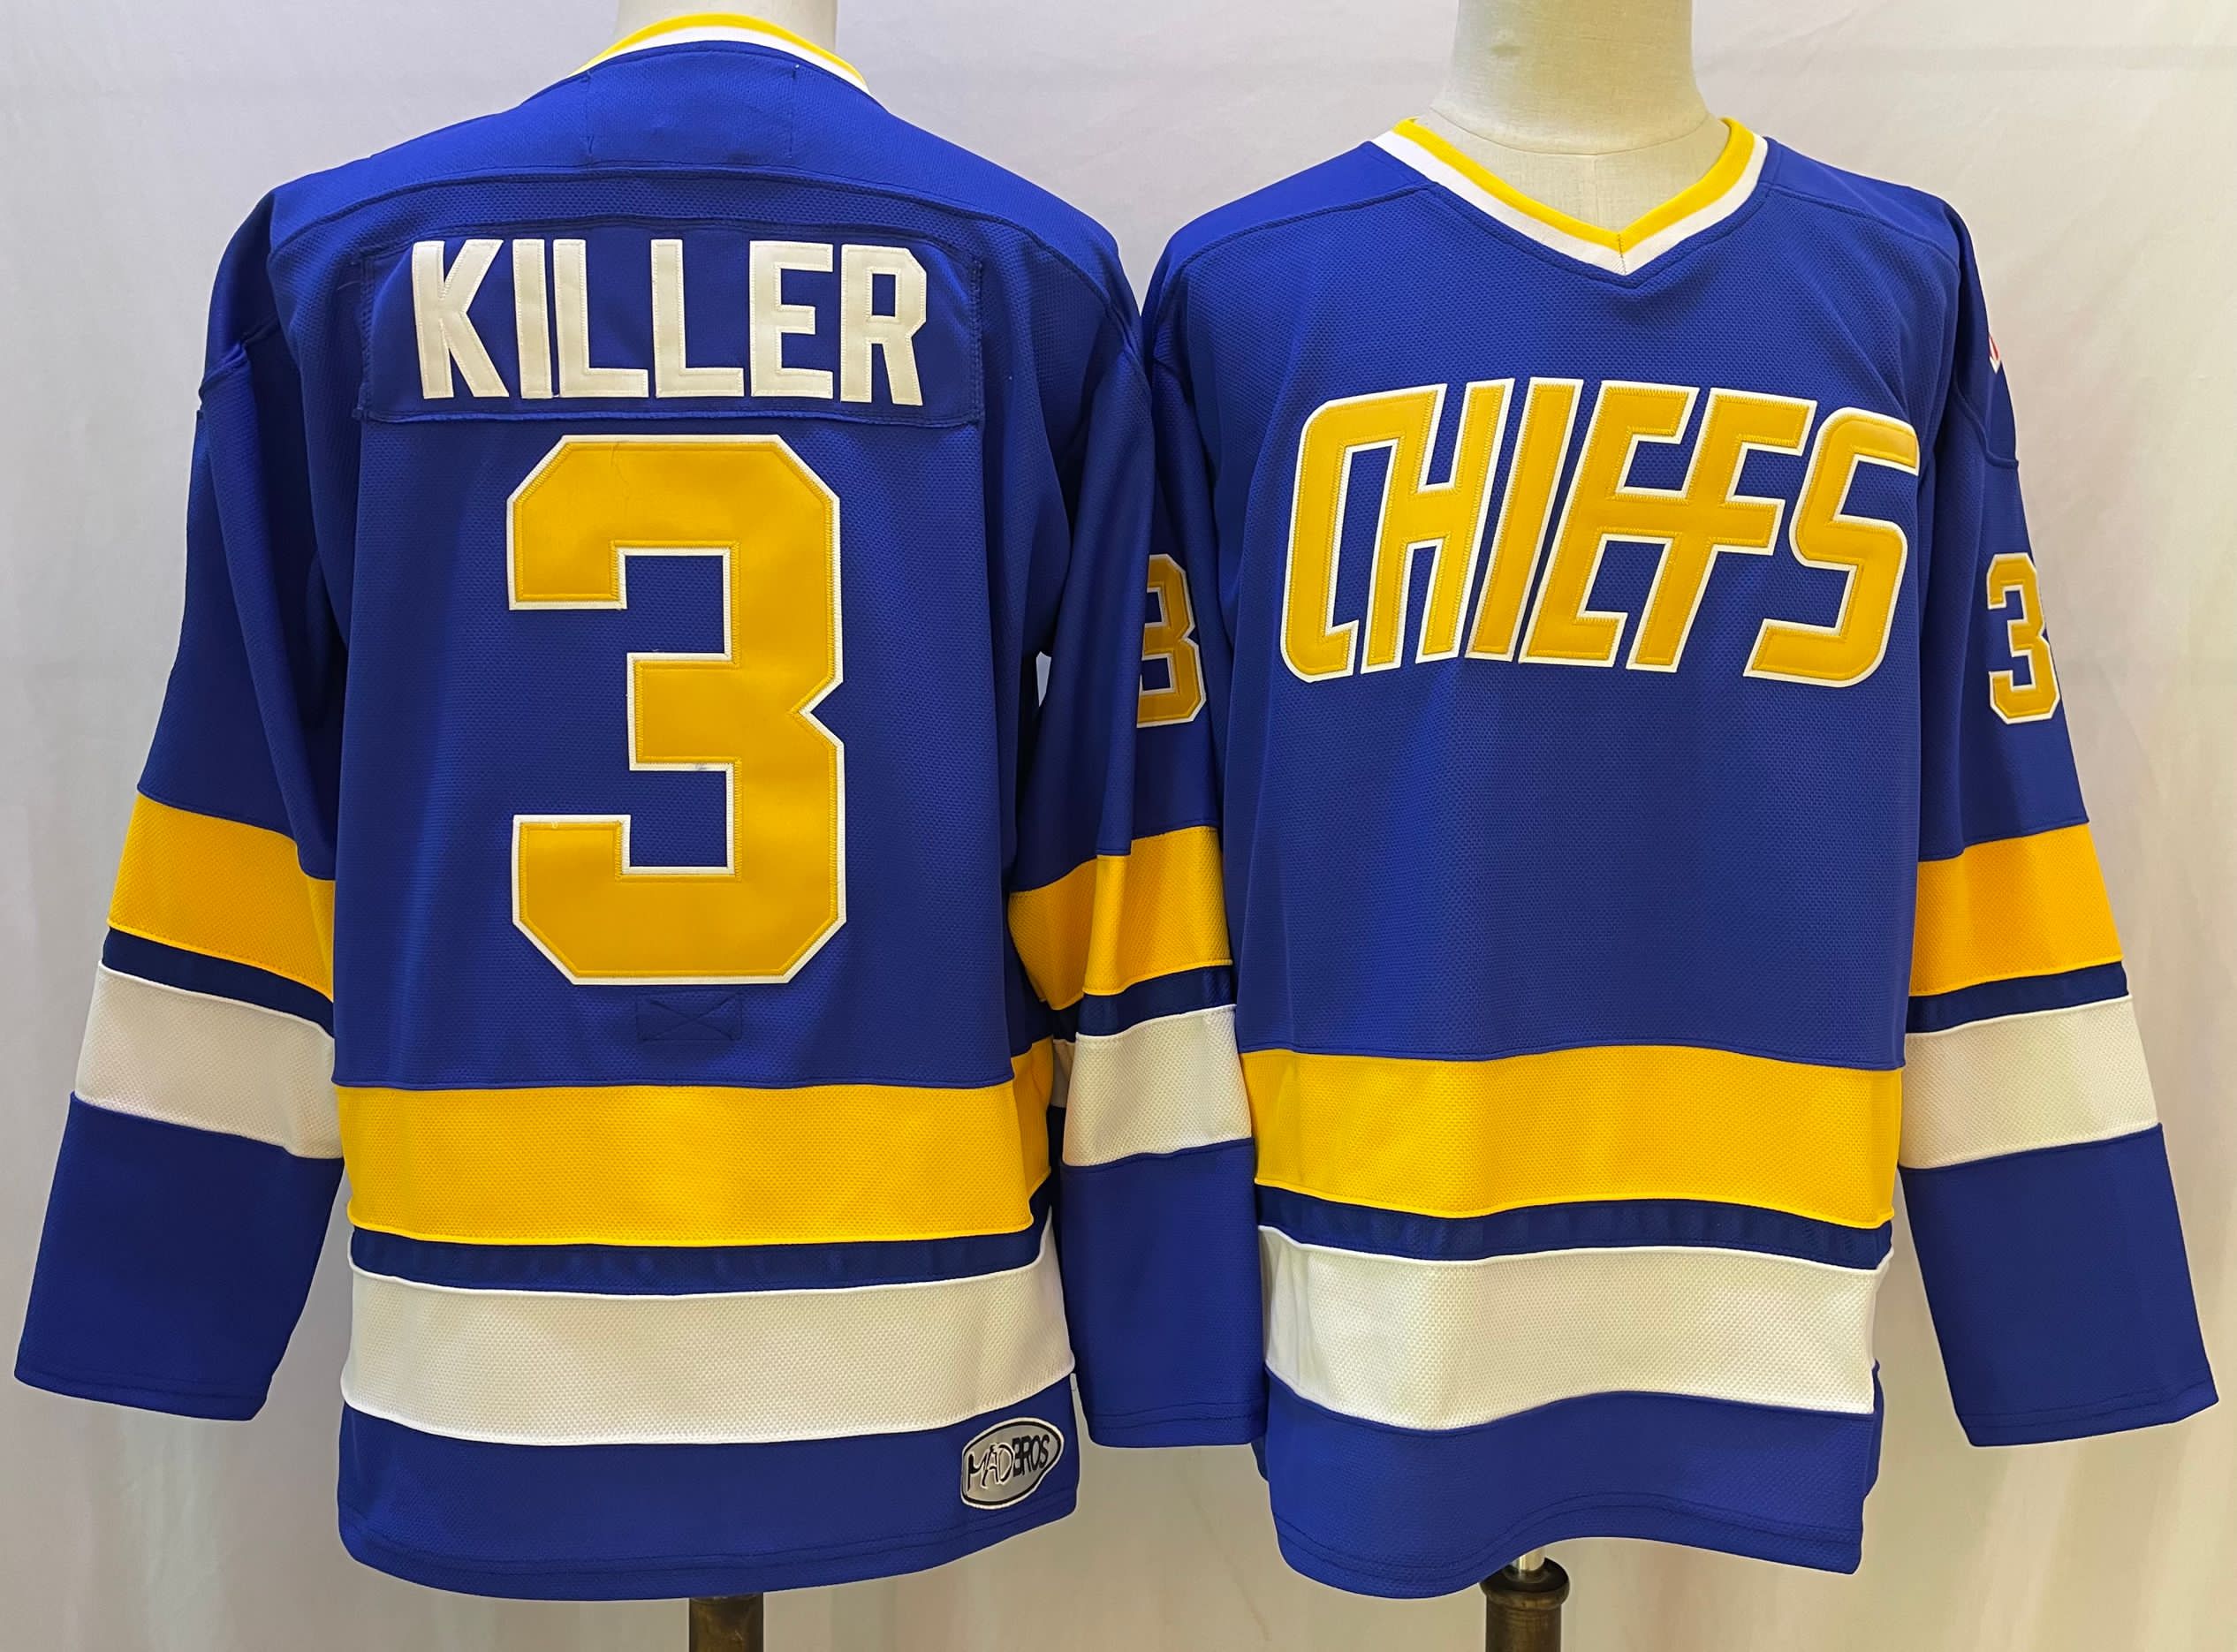 The NHL Movie Edtion #3 KILLER Blue Jersey